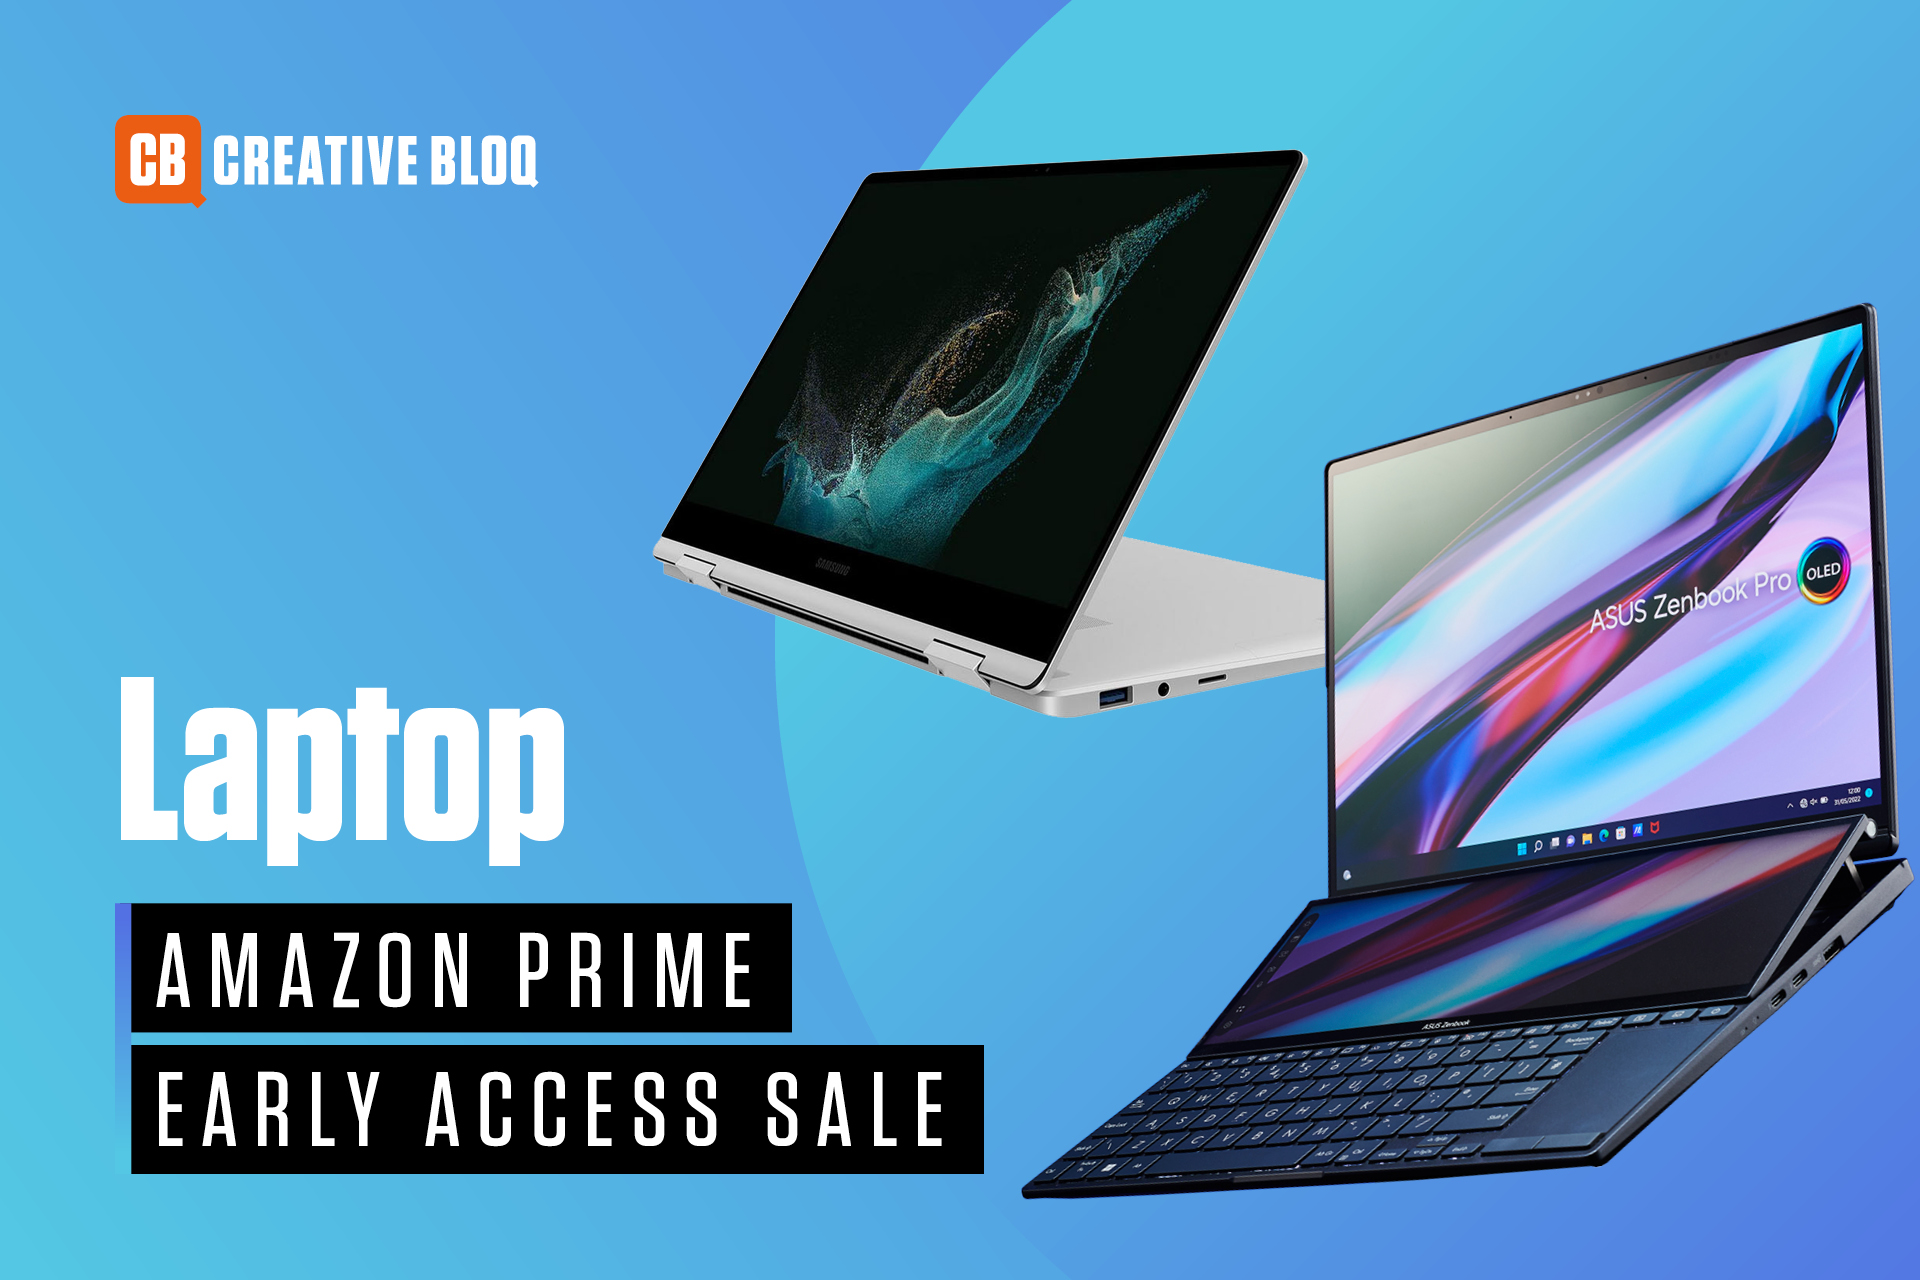 Best Buy laptop deals: Cheap laptops starting at $179